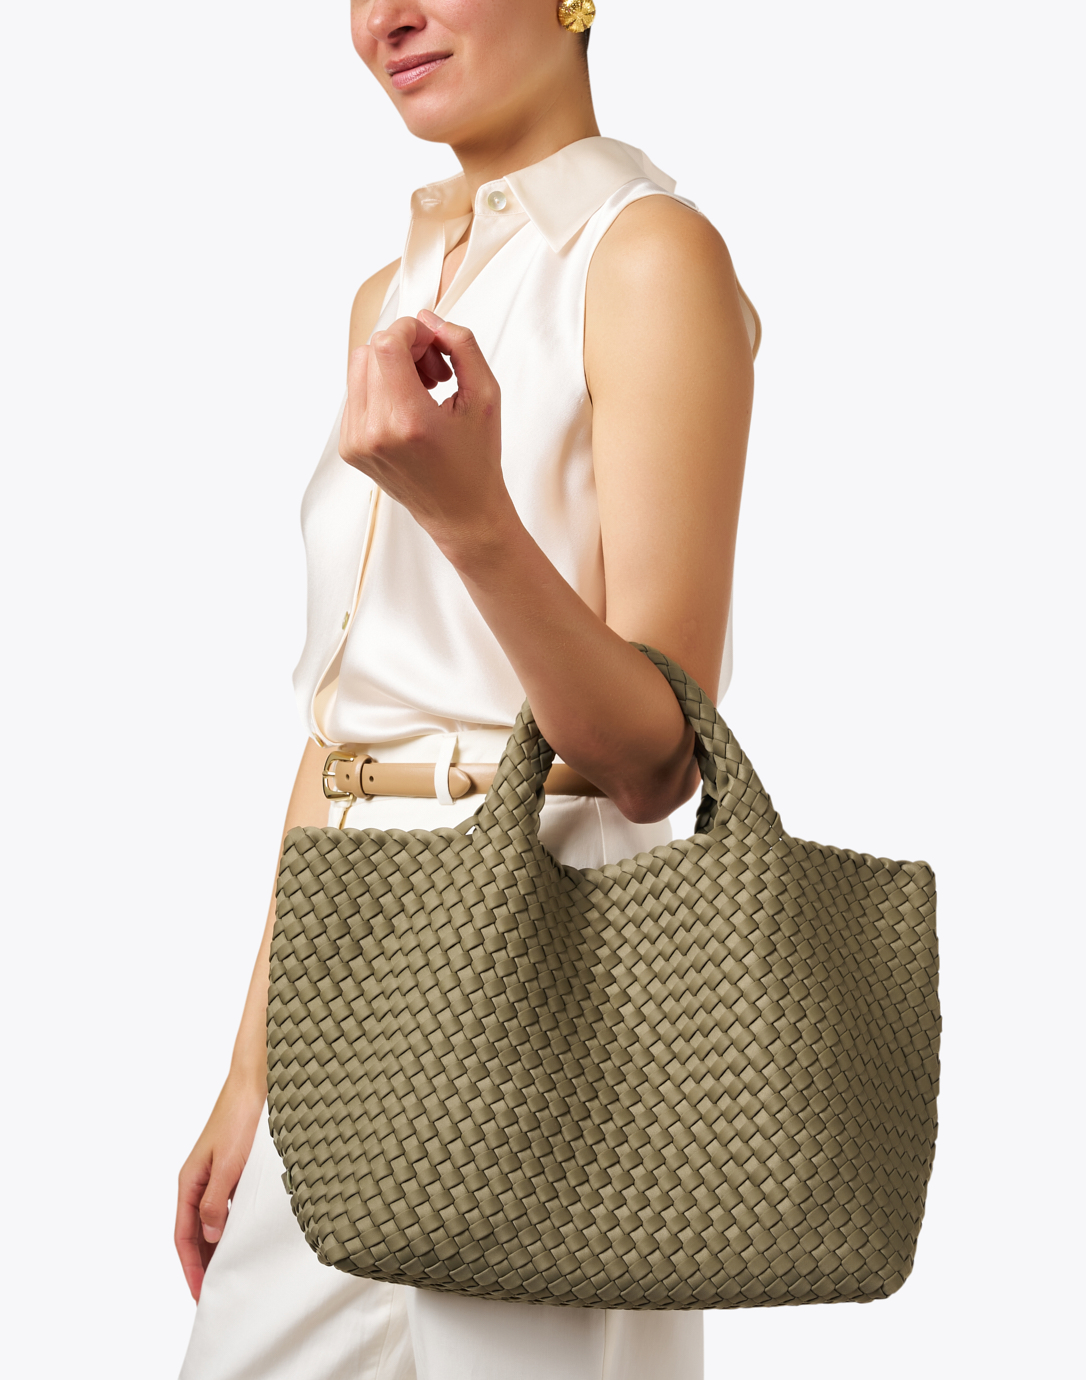 Bohemian Handbag, Woven Leaf Flower Shoulder Bag, Fashion